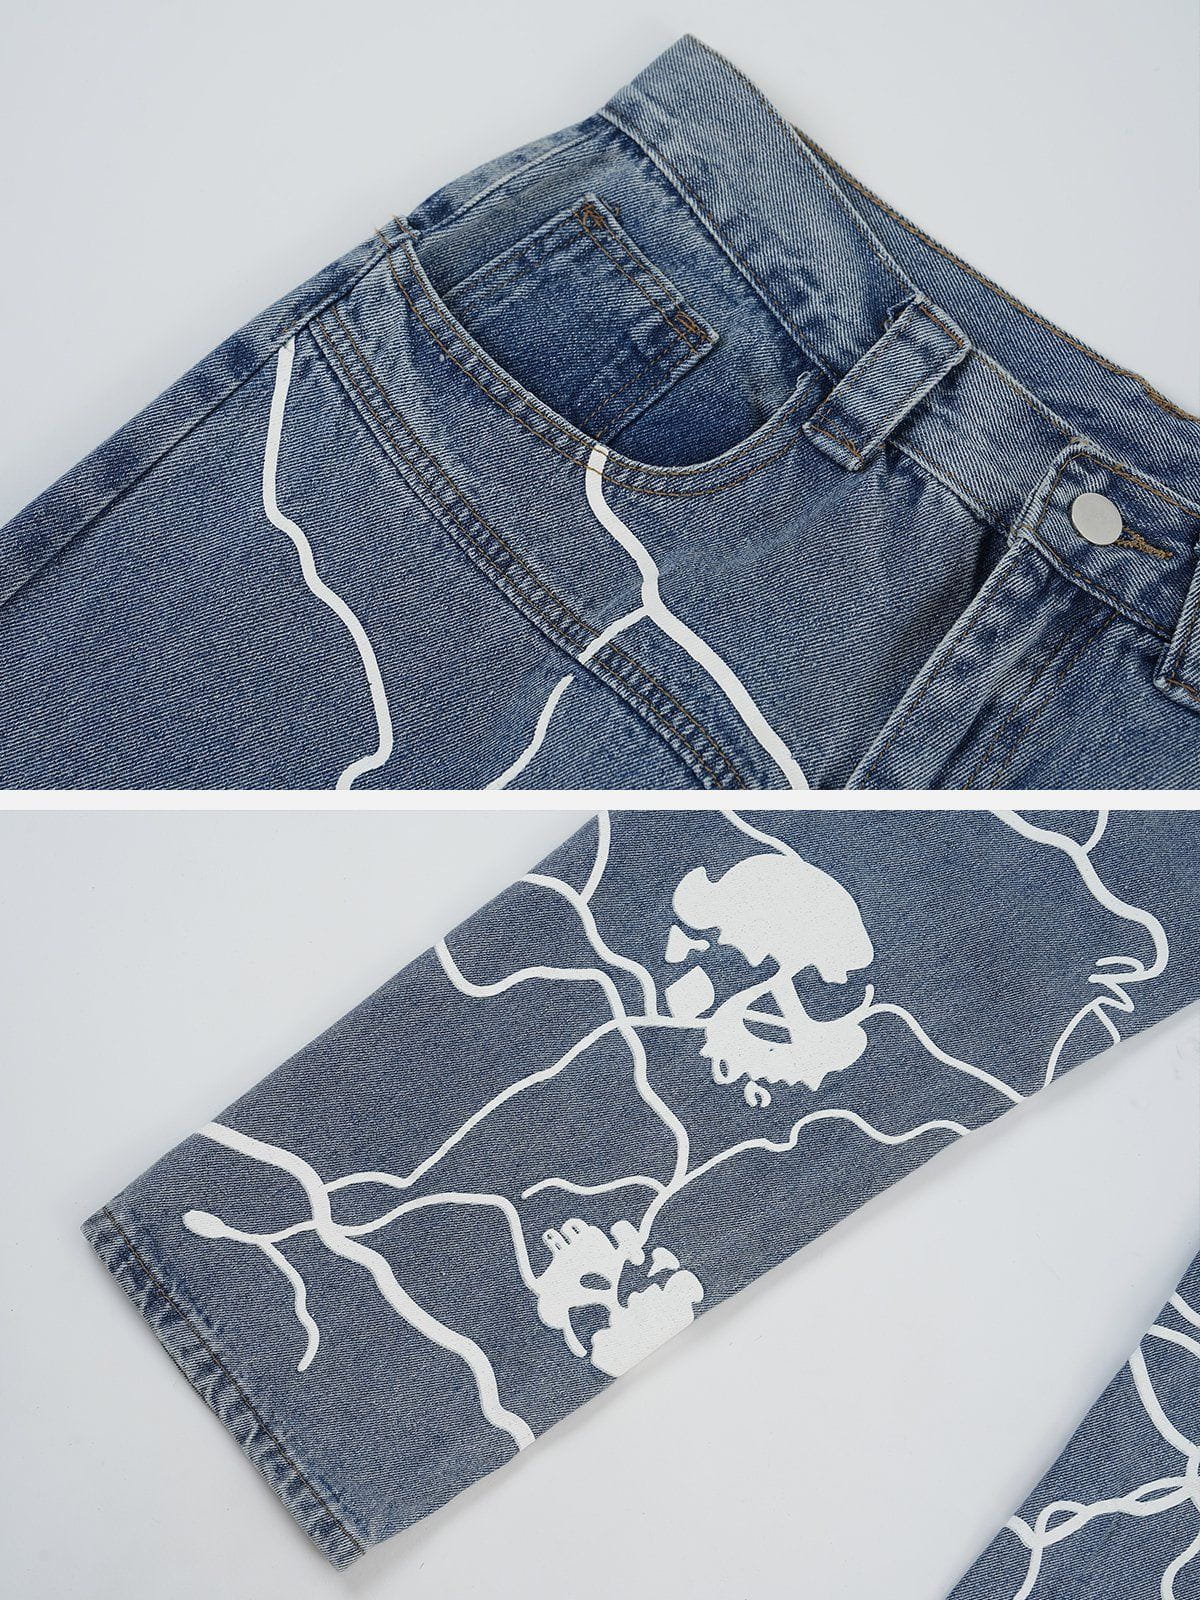 Faire Echo Lightning Skull Print Jeans Faire Echo